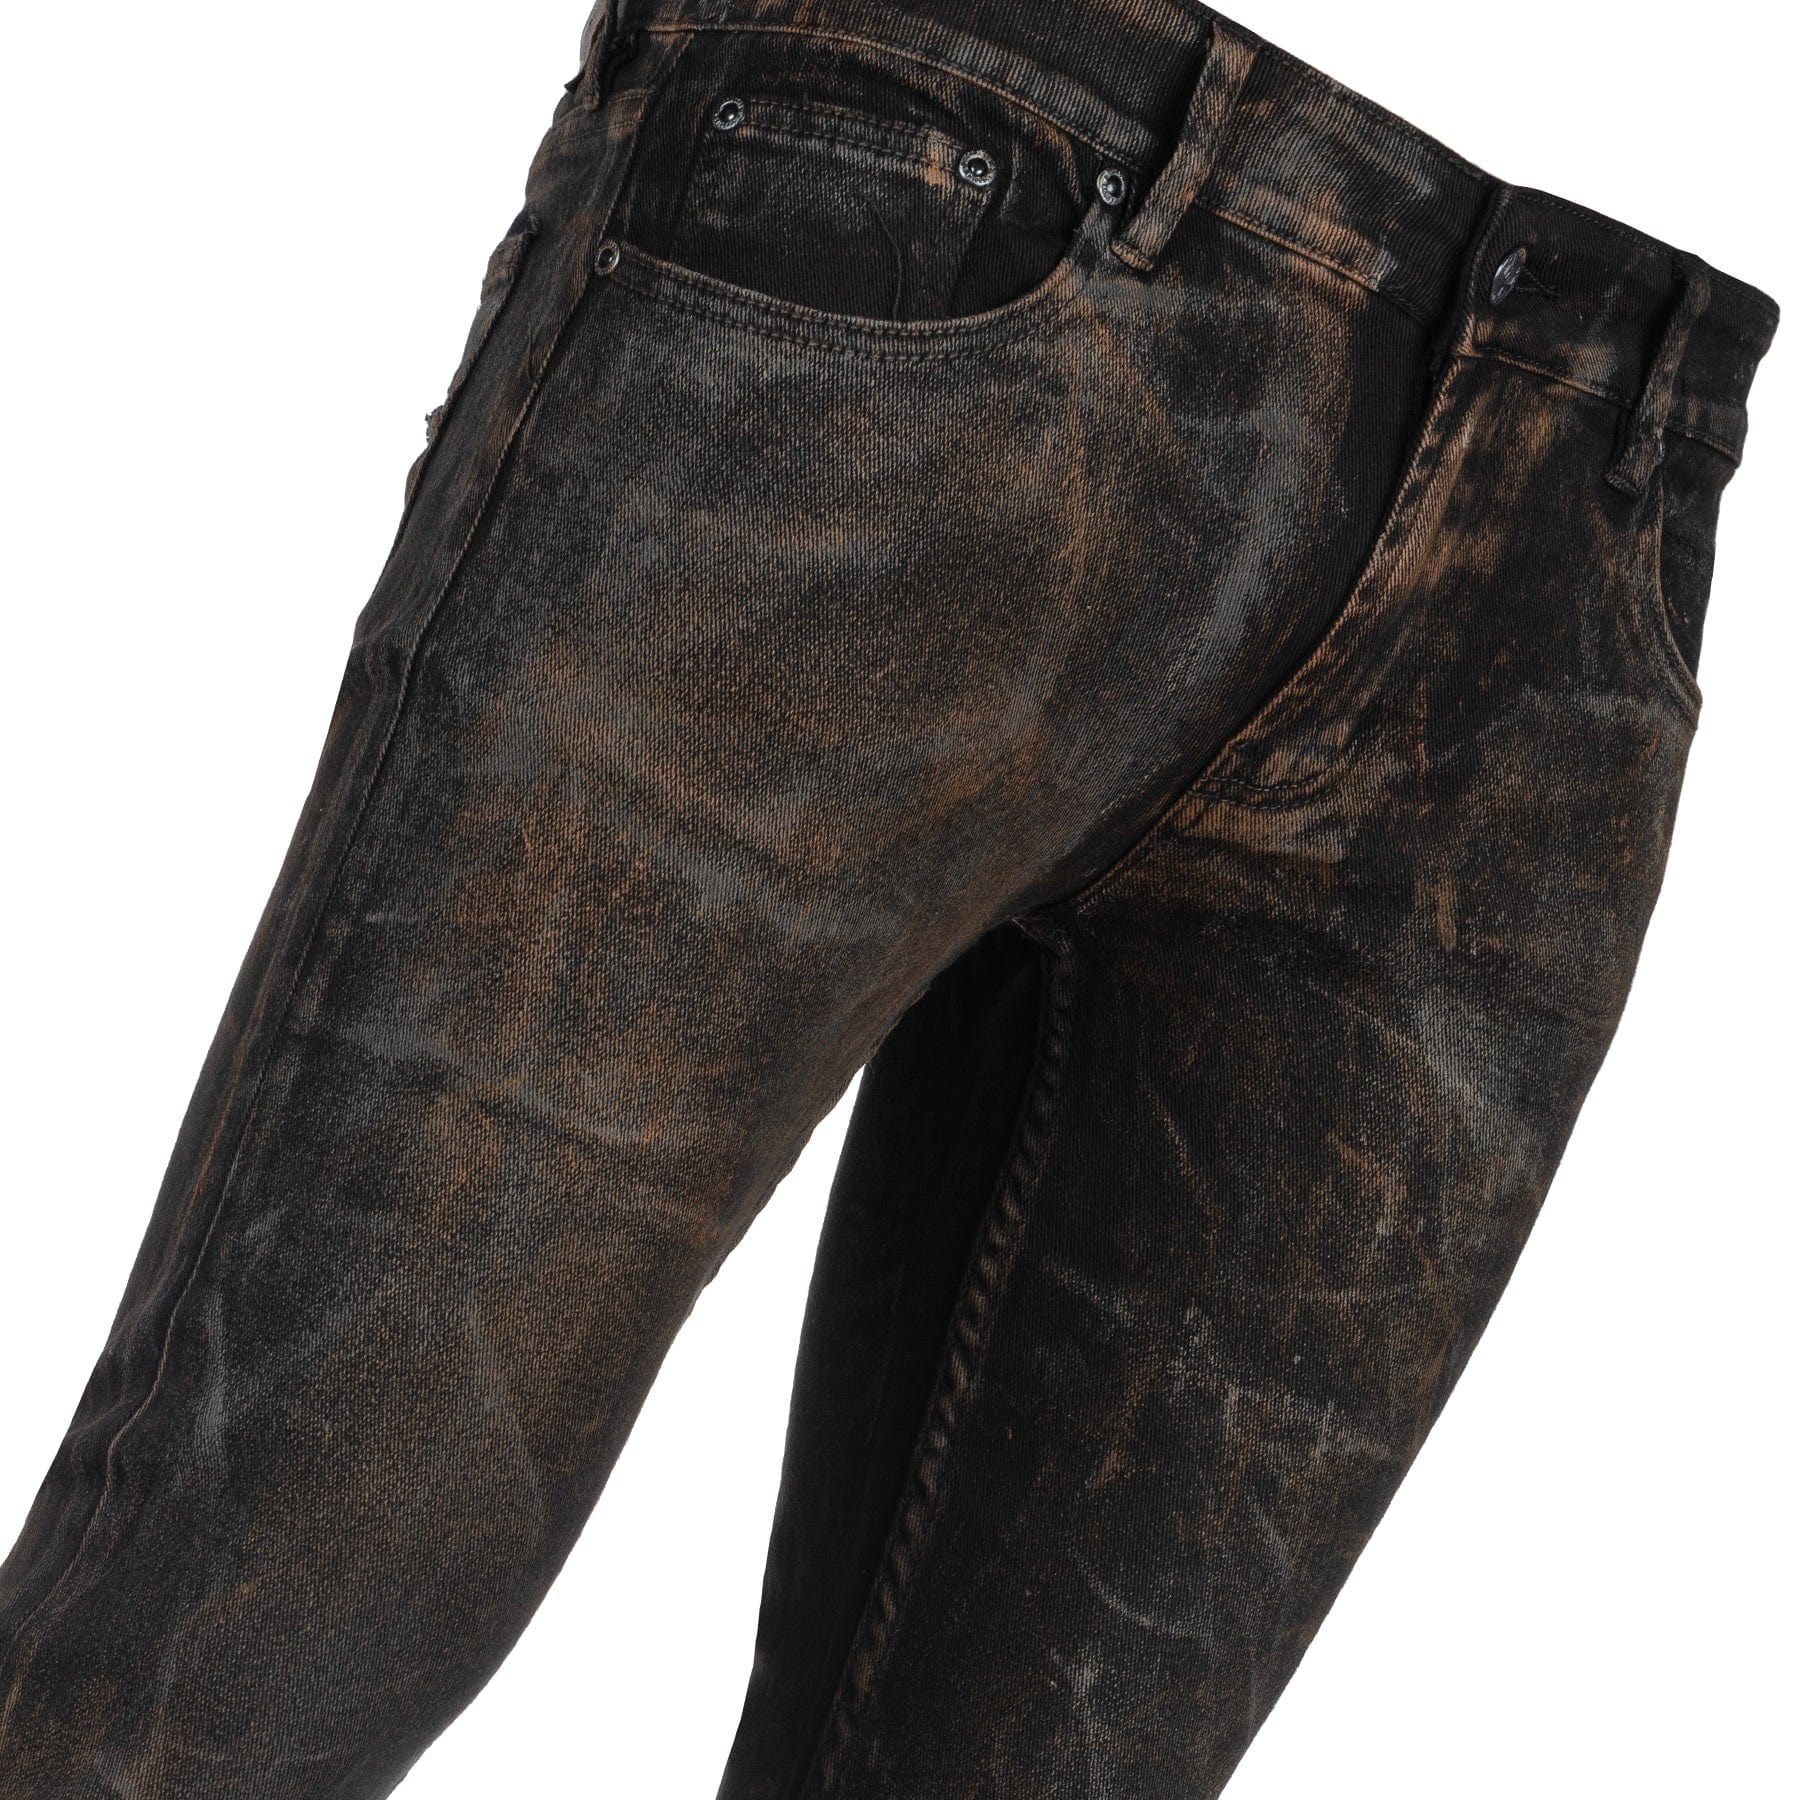 Custom Chop Shop Pants Wornstar Custom Jeans - Raw Umber Alloy Washed and Smoke Washed